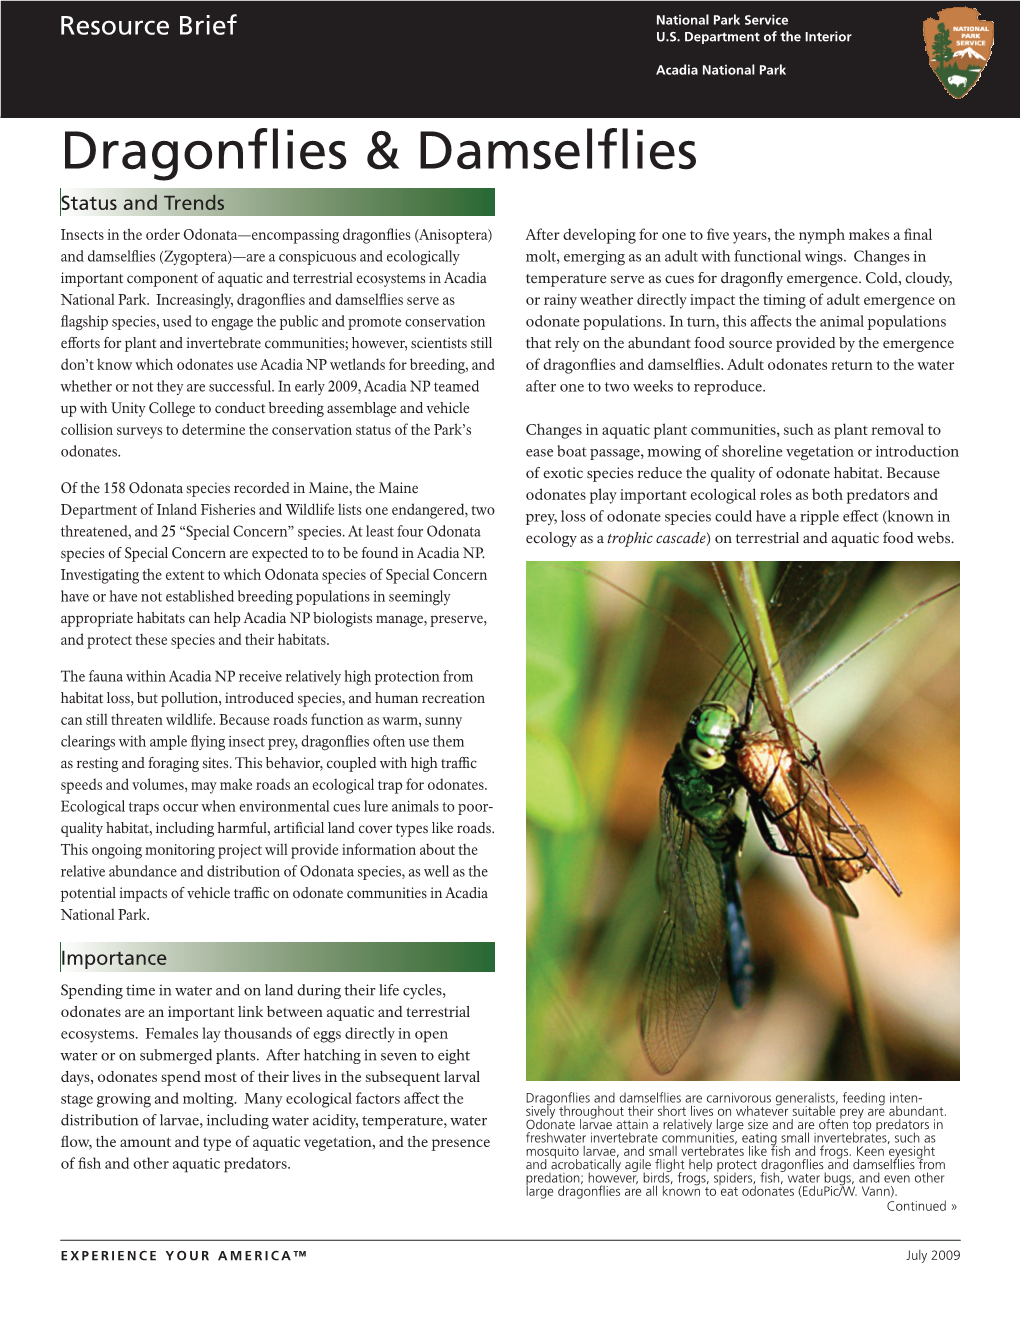 Dragonflies & Damselflies, Acadia National Park